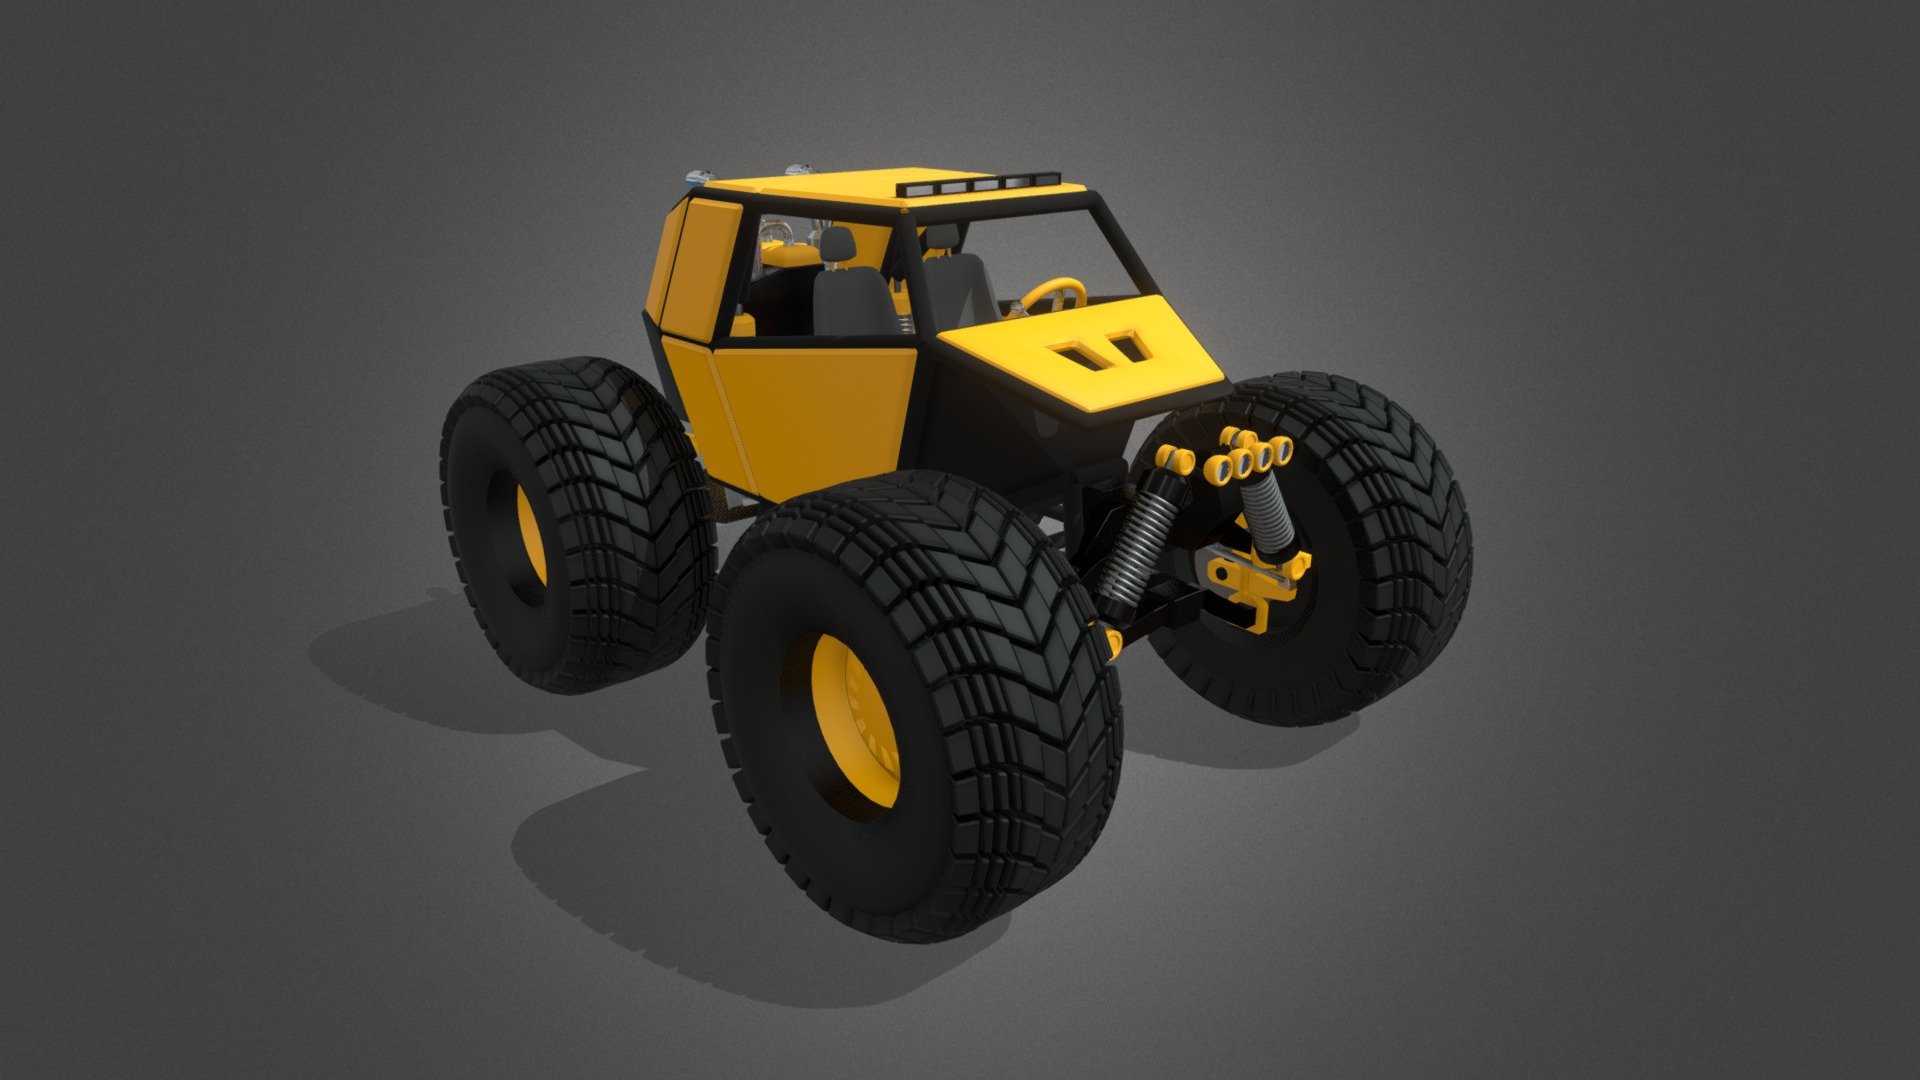 High quality 3d model of a monster truck - Cartoon offroad monster truck - 3D model by Ndevisuals (@Wade23) 3d model